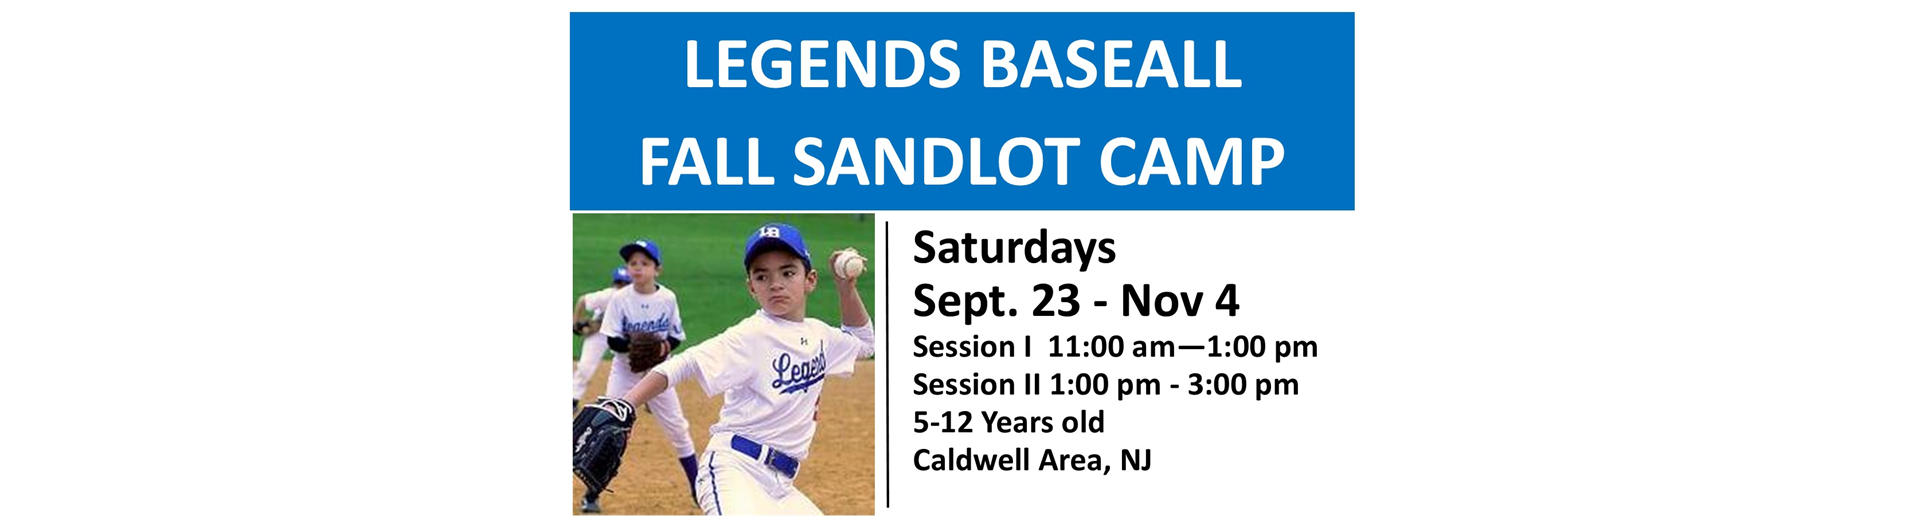 Legends Baseball Sandlot Saturday Camp